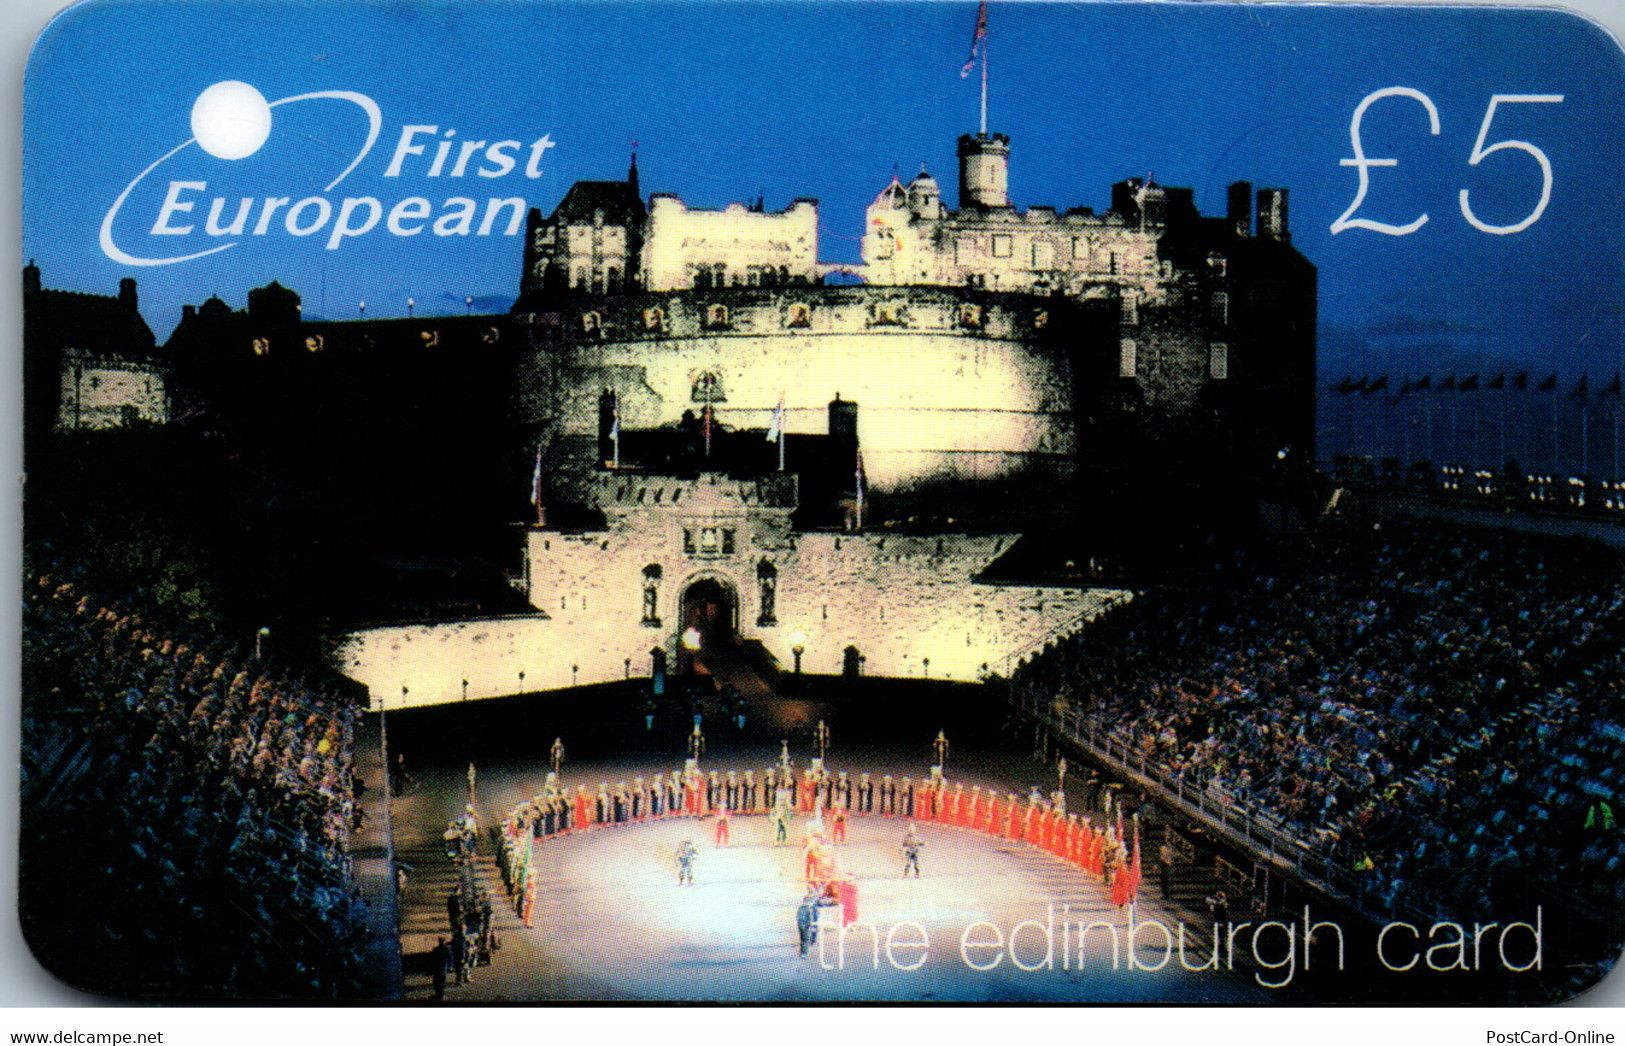 29246 - Großbritannien - First European , The Edinburgh Card , Prepaid - BT Schede Mondiali (Prepagate)